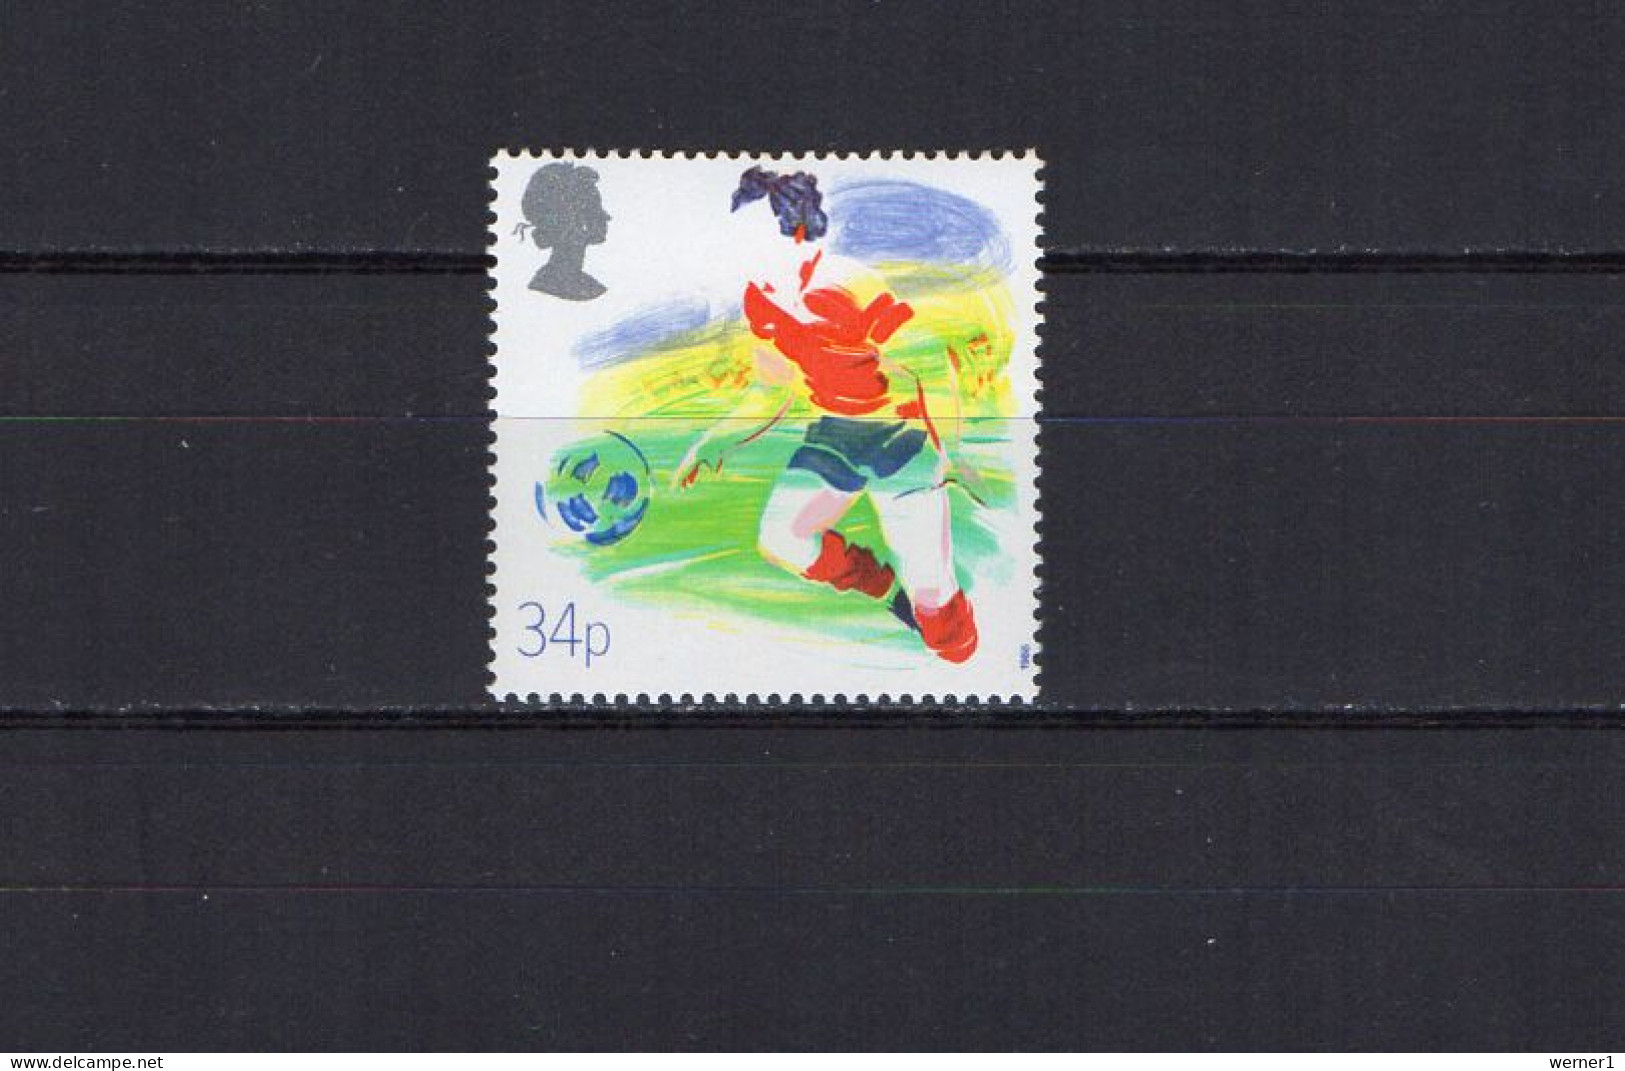 UK England, Great Britain 1988 Football Soccer Stamp MNH - Ungebraucht